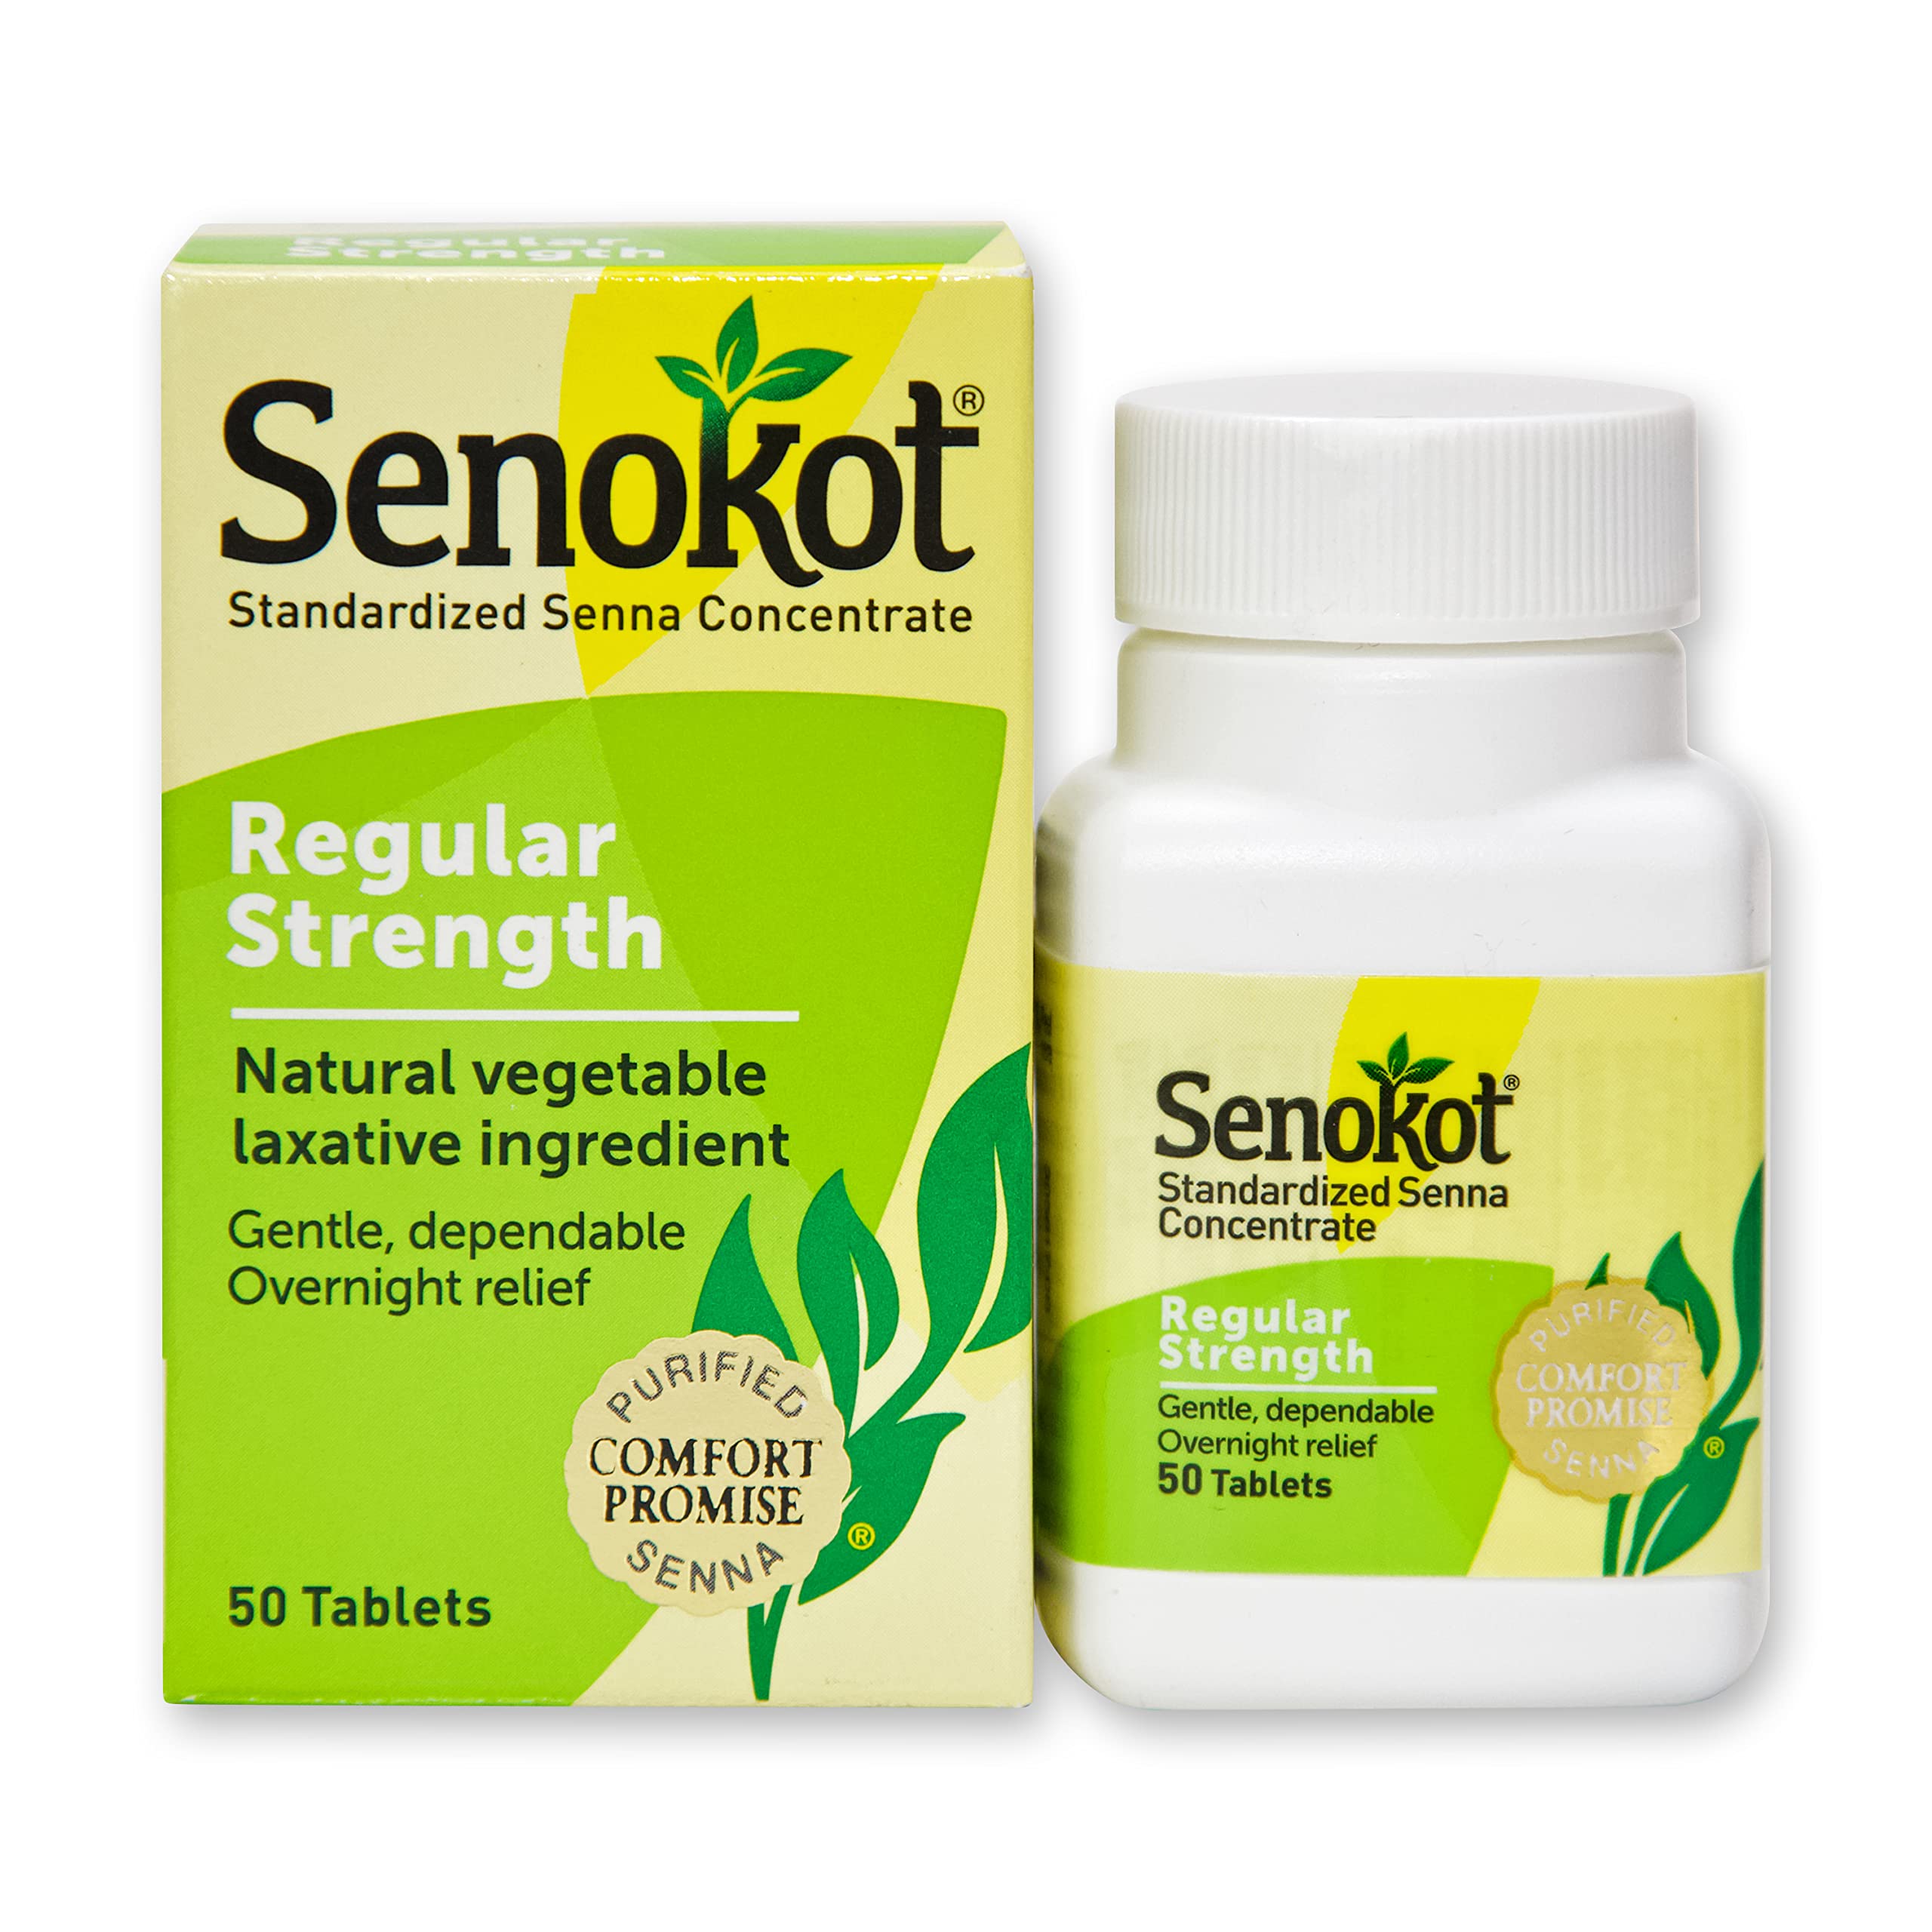 Senokot Regular Strength Tablets Natural Vegetable Laxative Ingredient, 50 Count